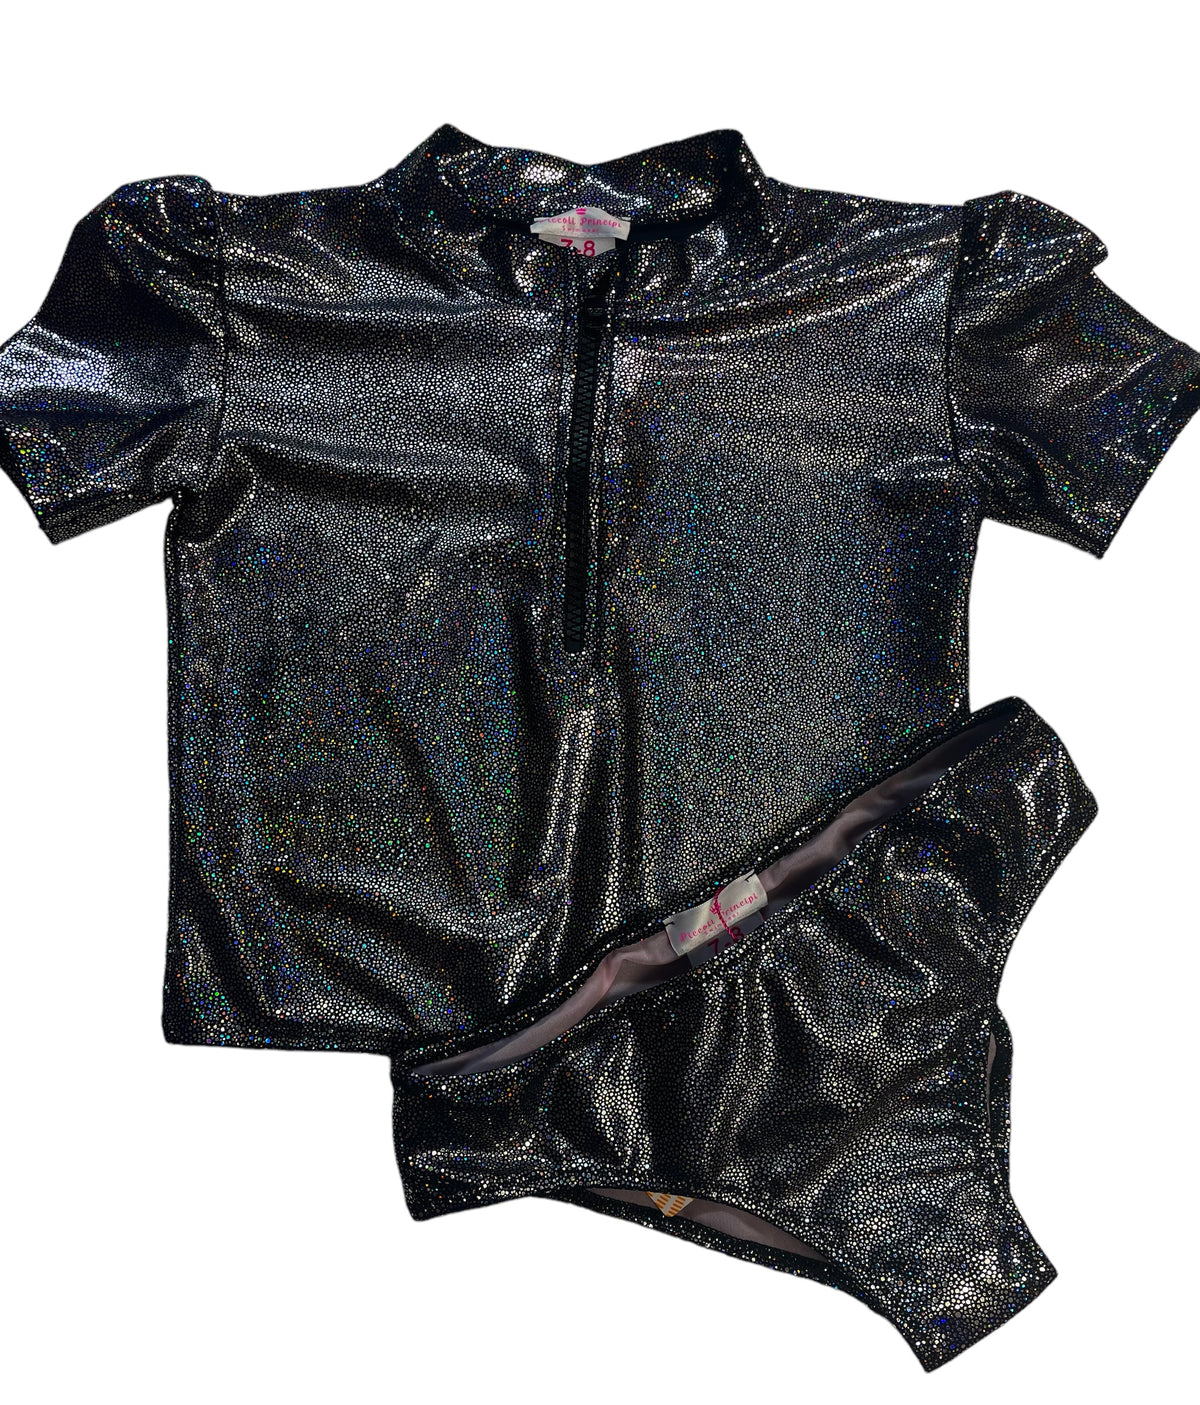 Piccoli Principi Aruba Zip Up Tween Rashguard Swimsuit  - Black/Silver Glitter